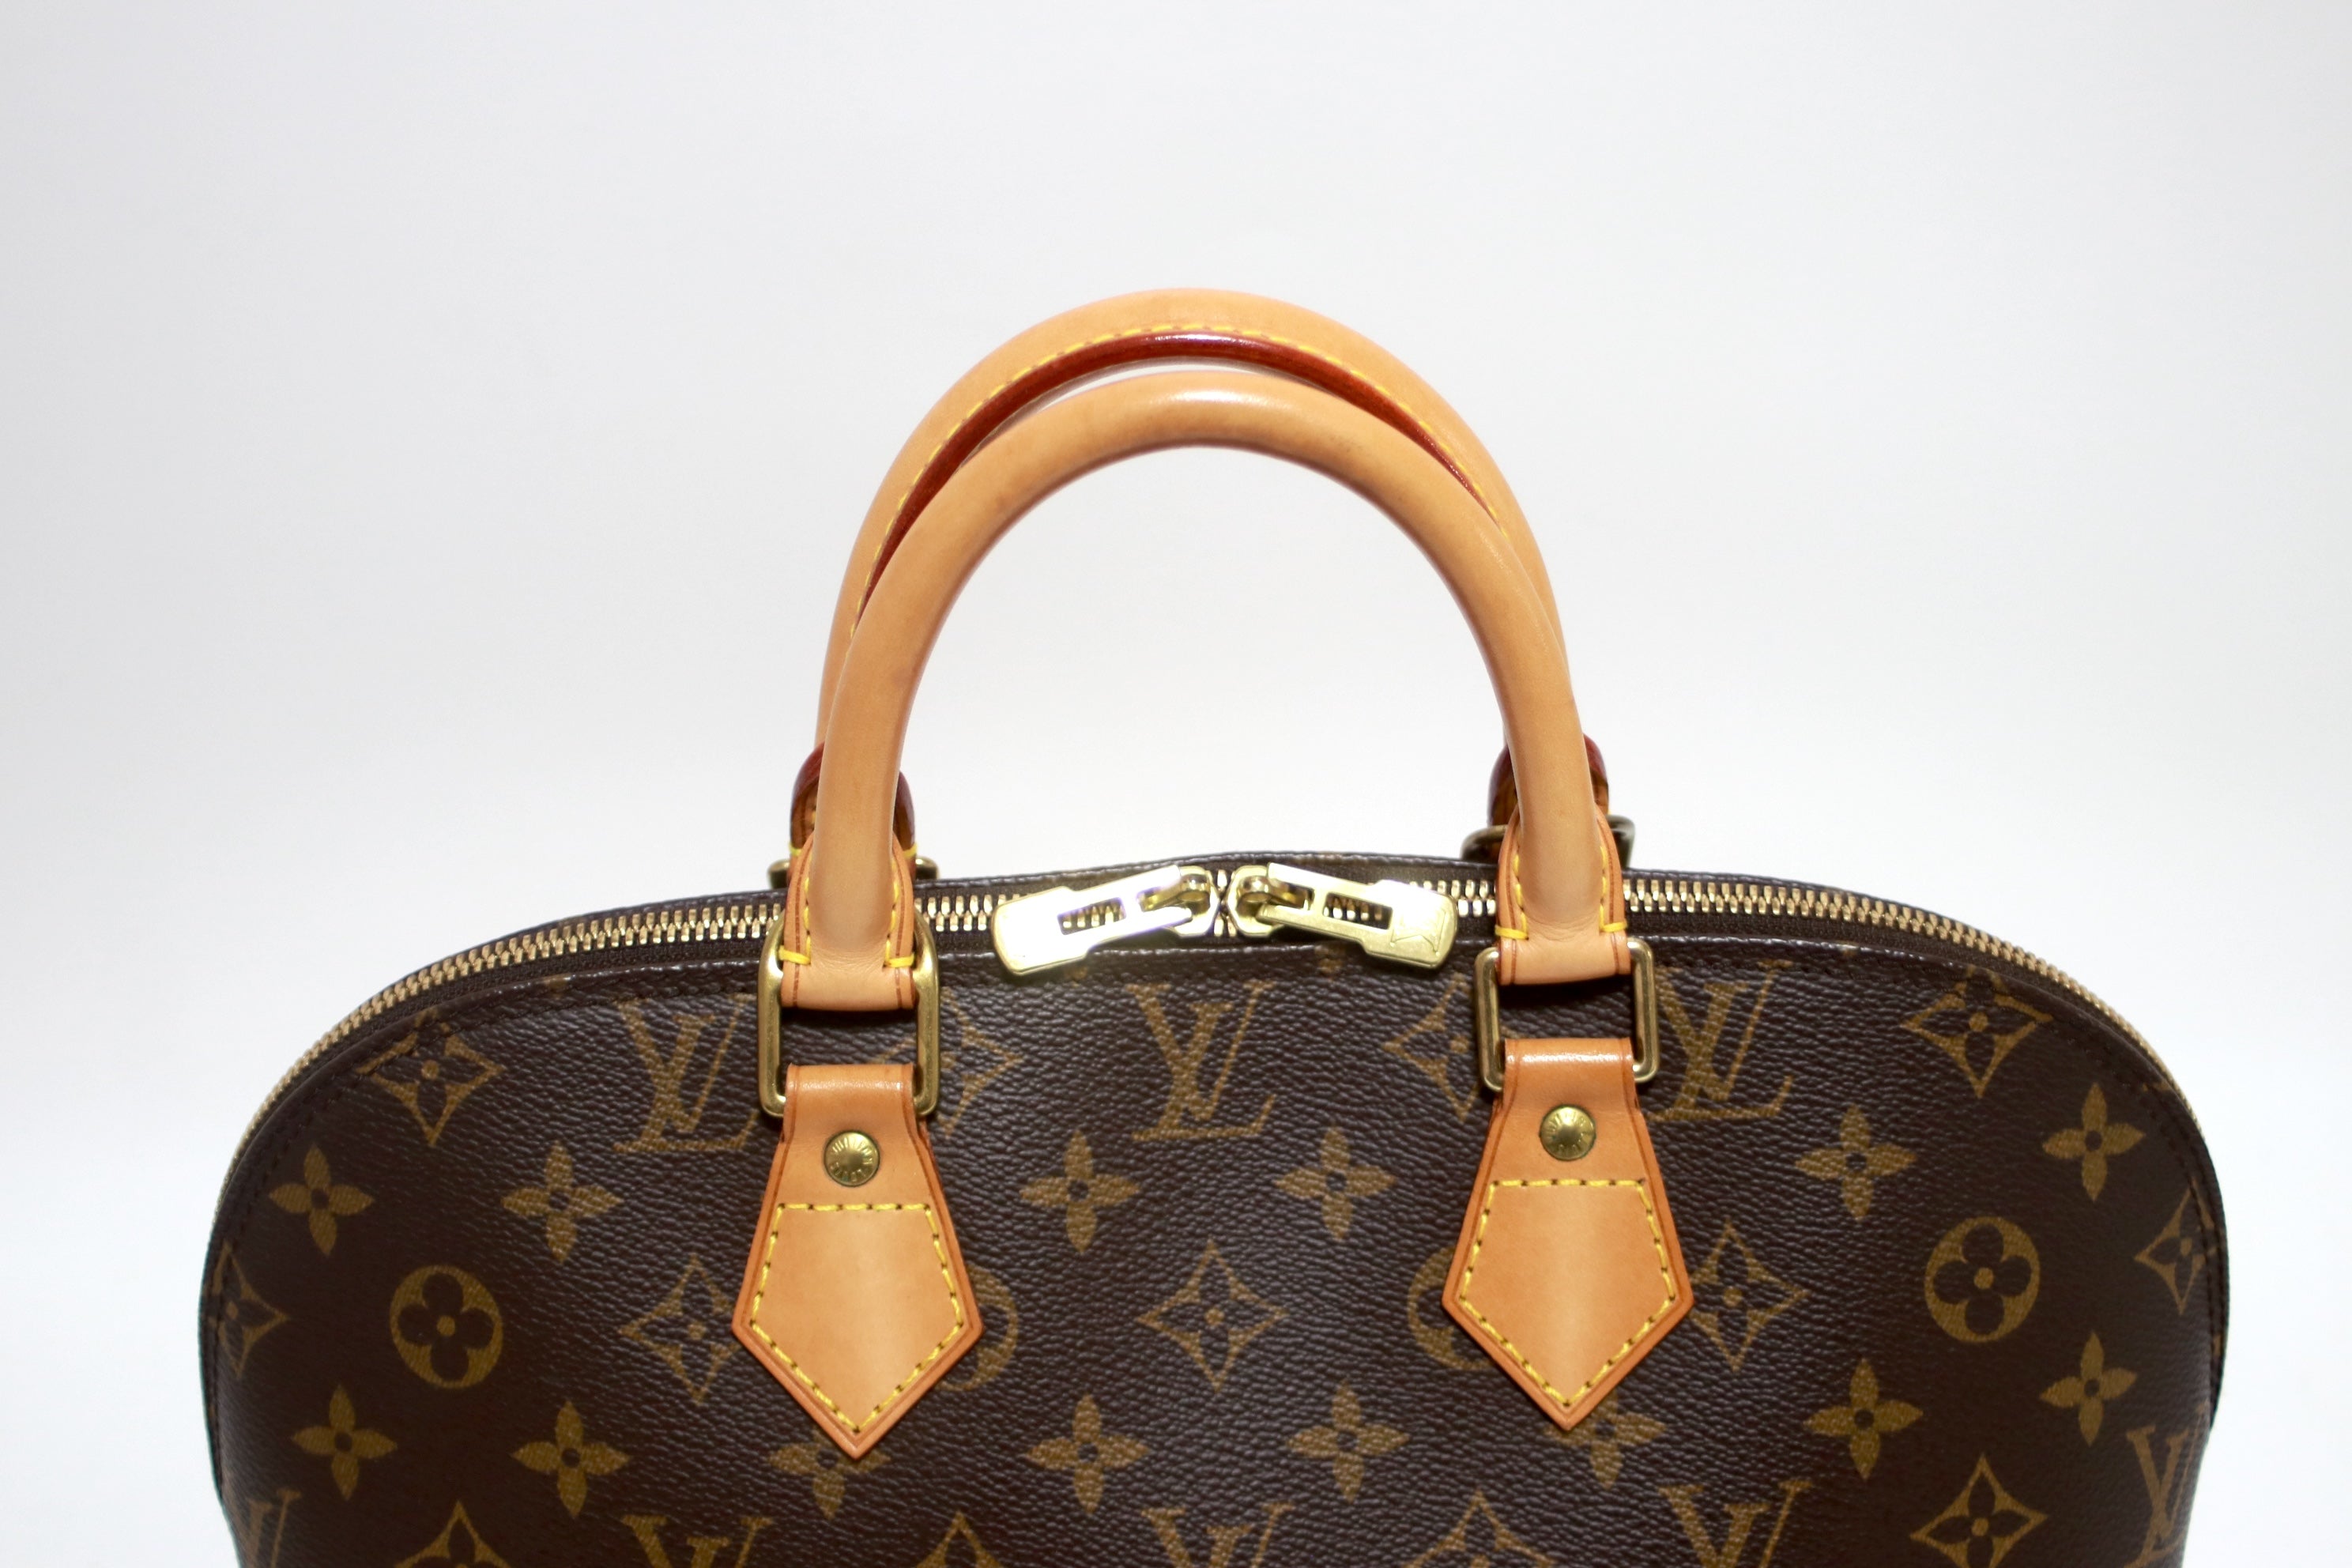 Louis Vuitton Alma Pm Handbag Used (8238)